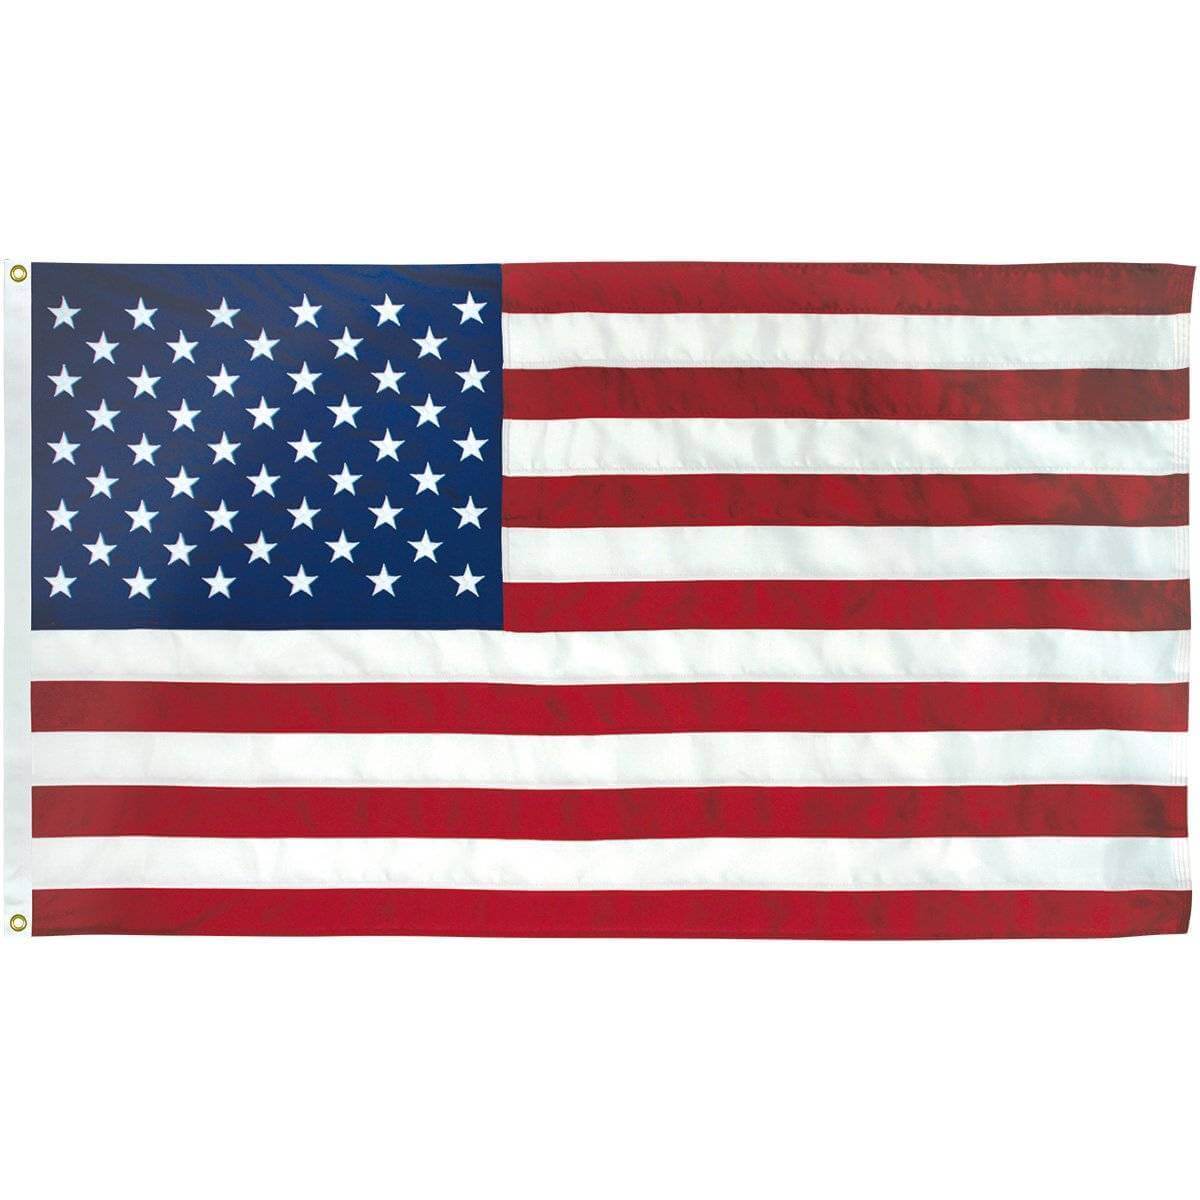 USA Flag American Flag 3x5 3'x5' EMBROIDERED COTTON 2 Sided 50 Star USA Shipper 